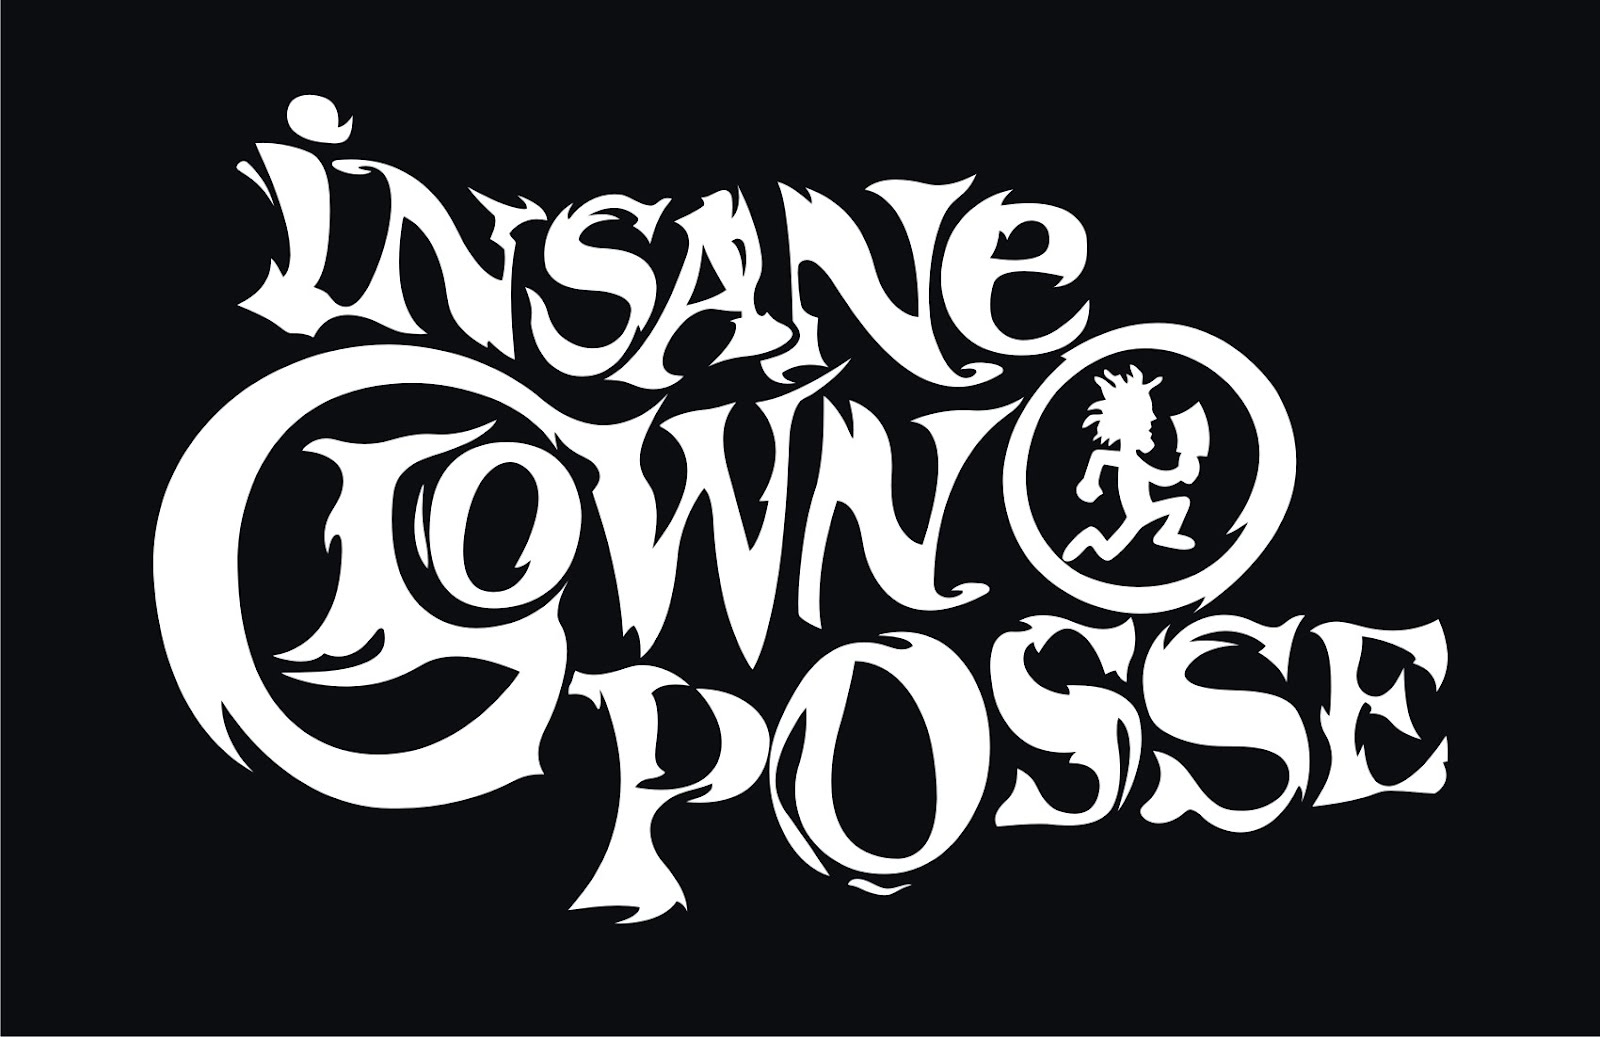 insane clown posse wallpaper,font,text,calligraphy,graphic design,logo